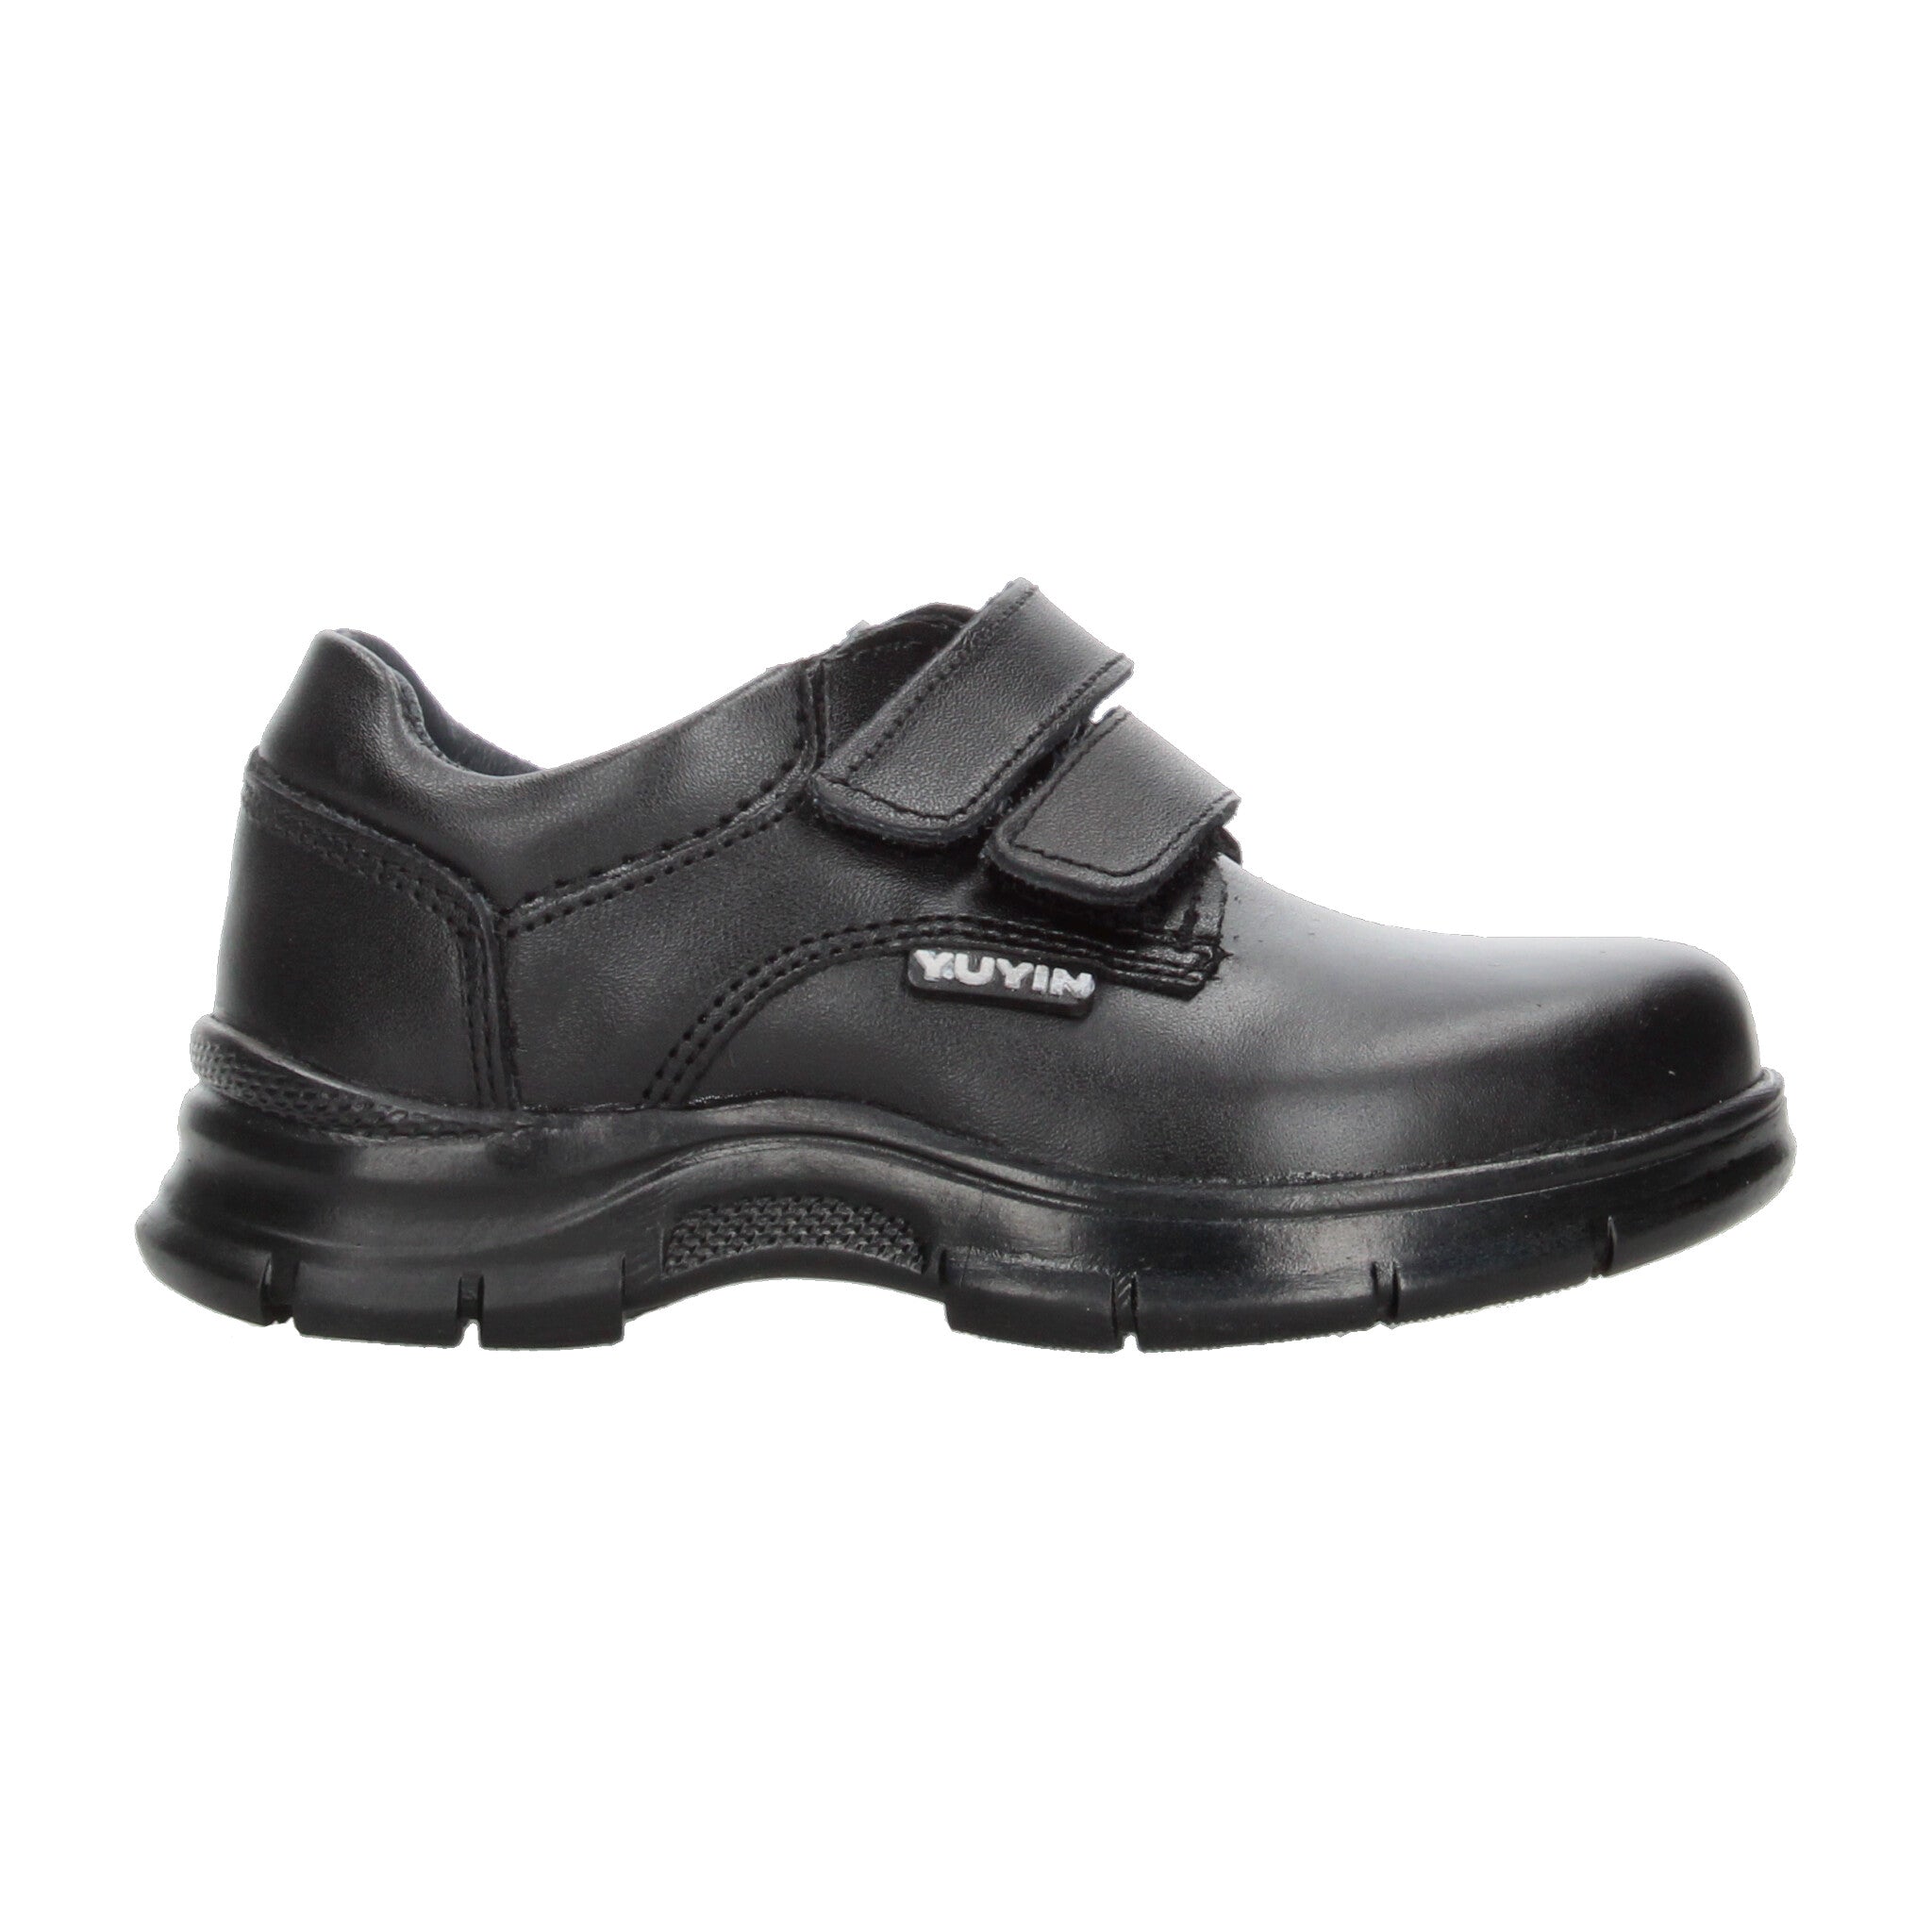 Zapato Escolar Yuyin Negro para Niño (15 - 17.5) [YUY506] YUYIN 